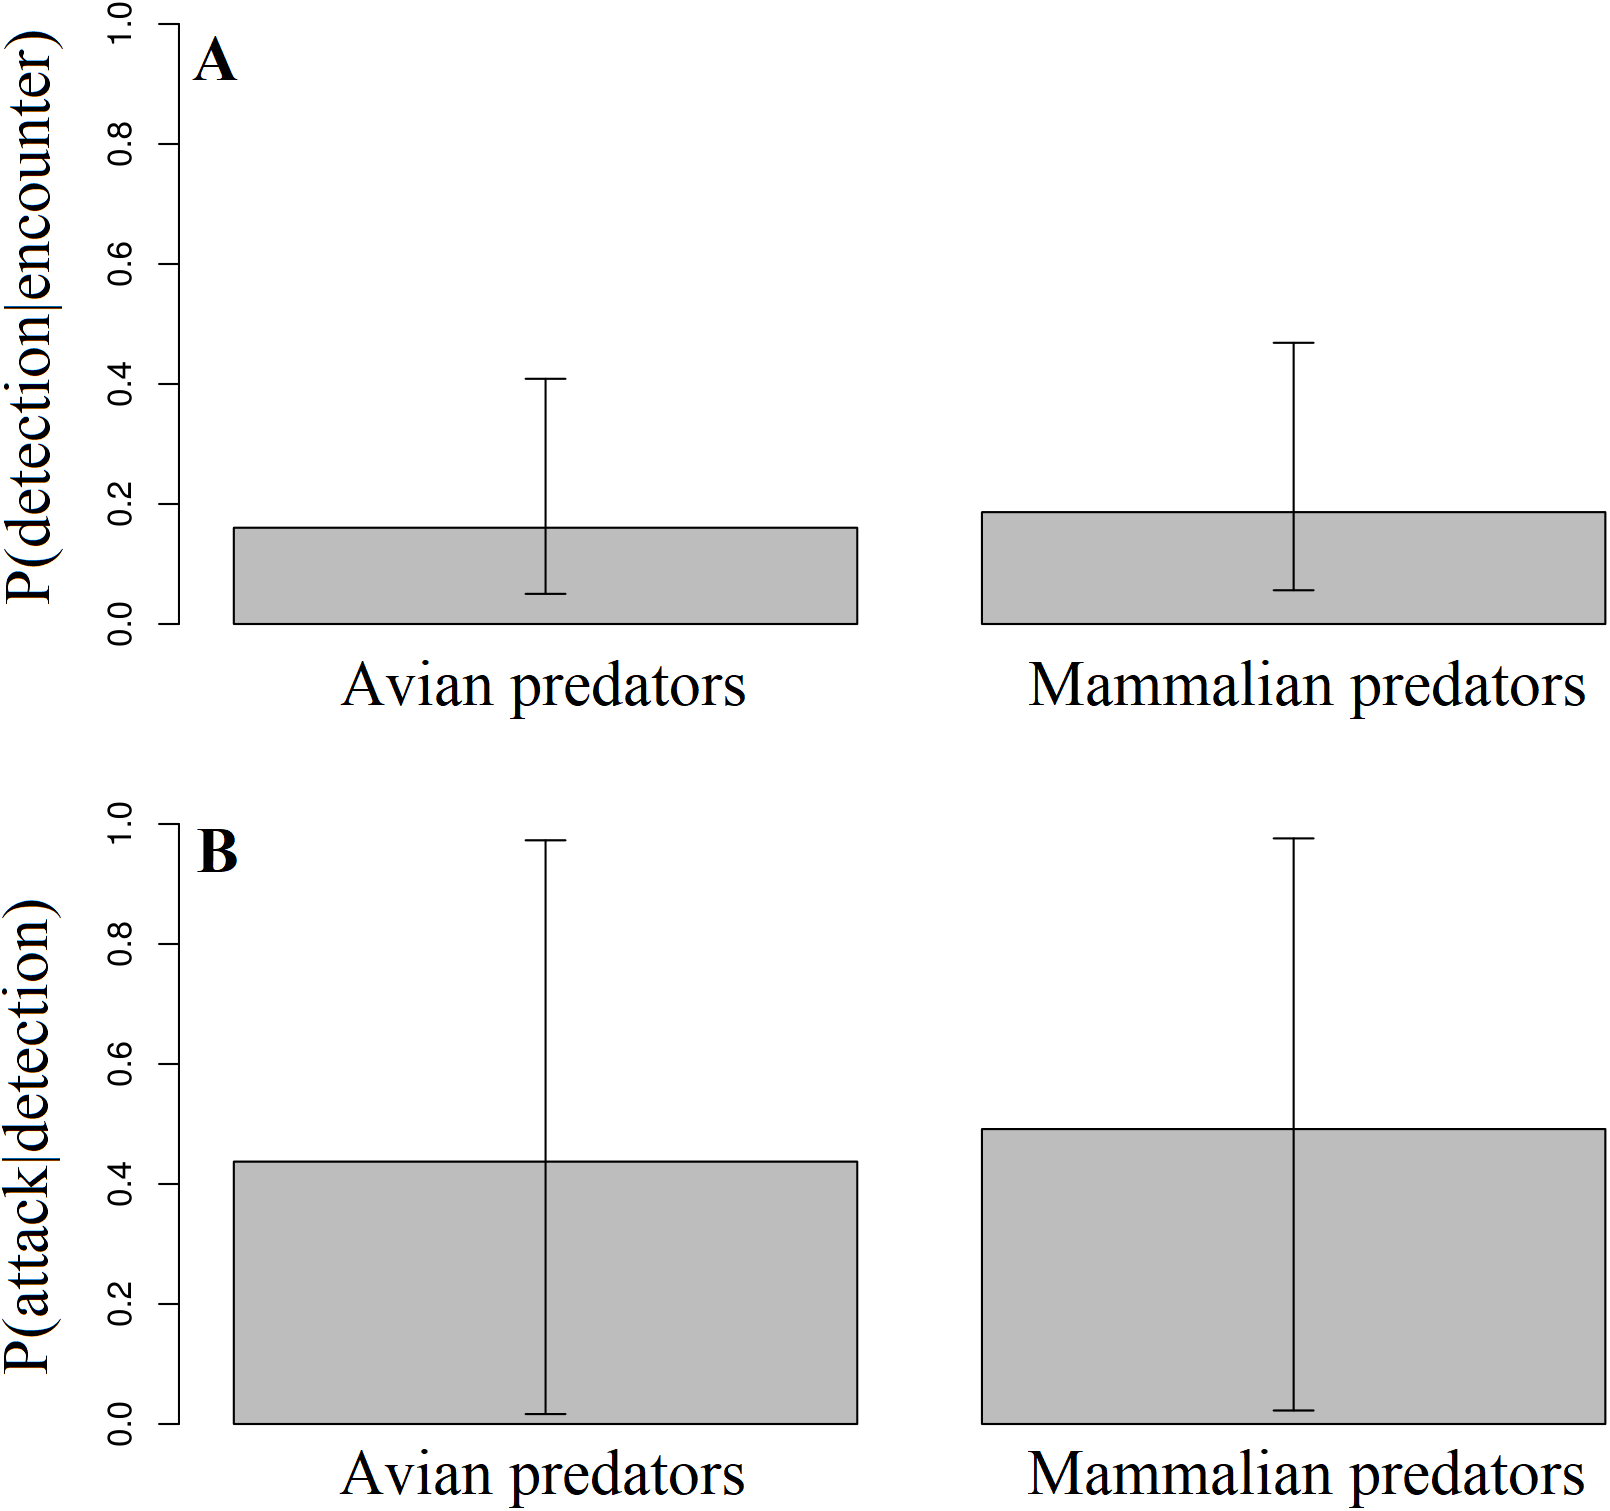 Evaluating the utility of camera traps in field studies of predation [PeerJ]